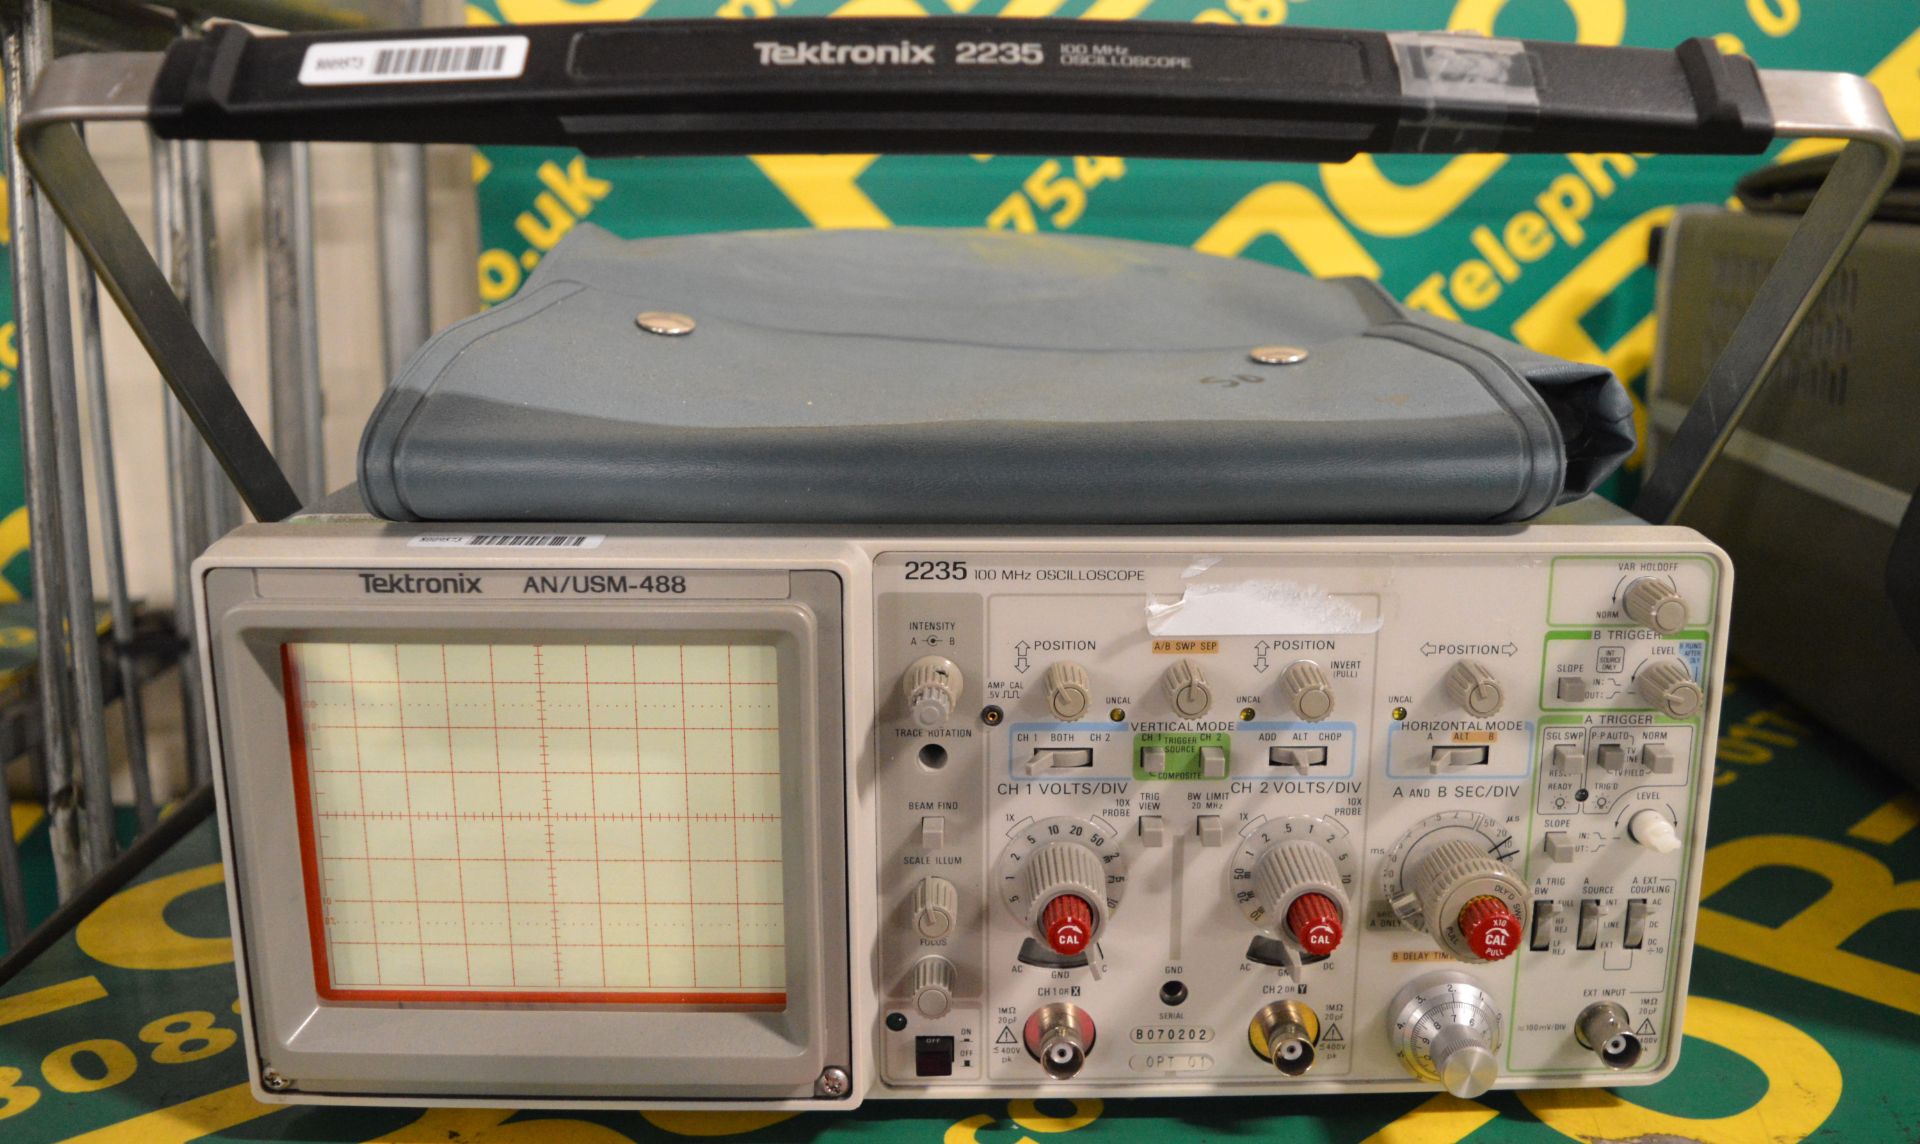 Tektronix AN/USM-488 Oscilloscope.